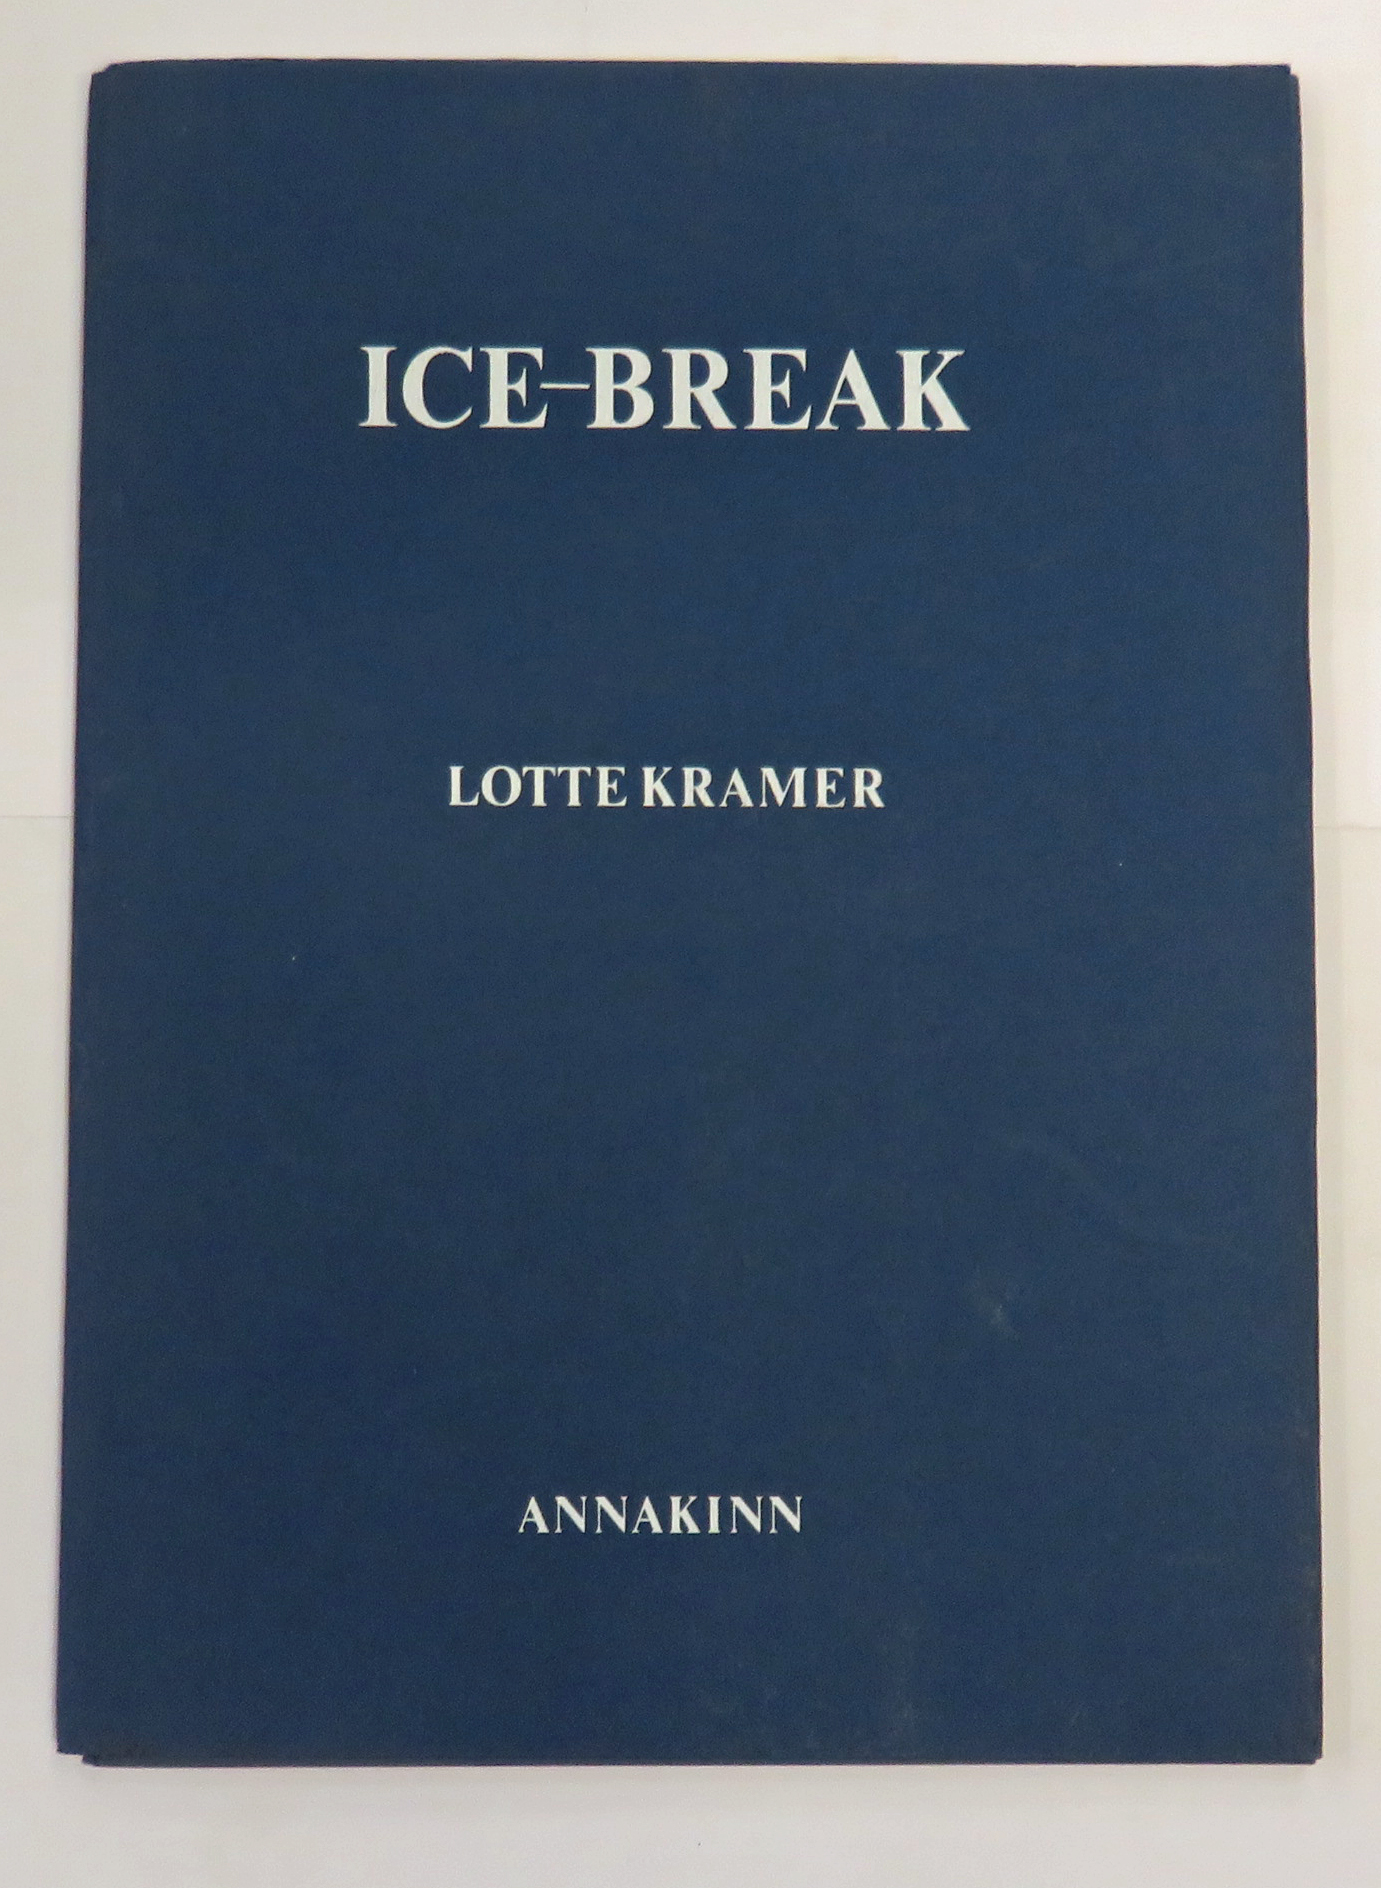 Ice-Break